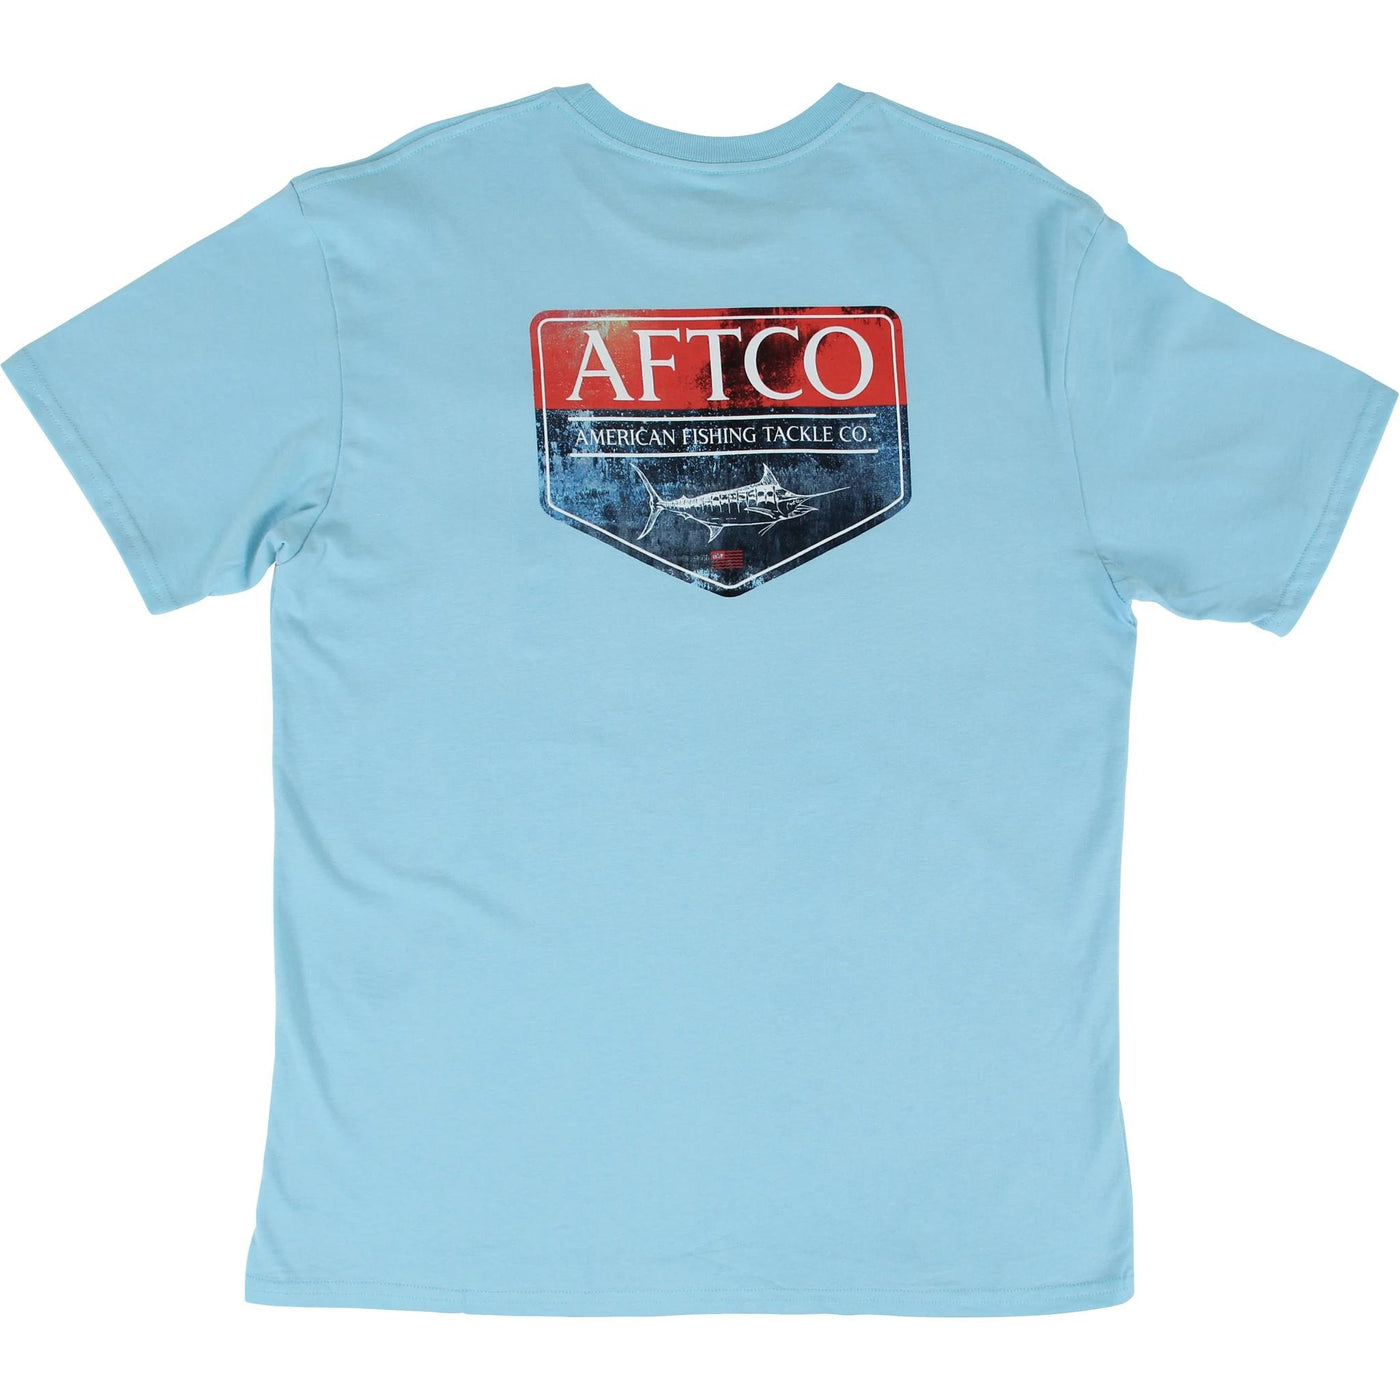 Aftco Splatter Short Sleeve T- Shirt-MENS CLOTHING-Light Blue-S-Kevin's Fine Outdoor Gear & Apparel